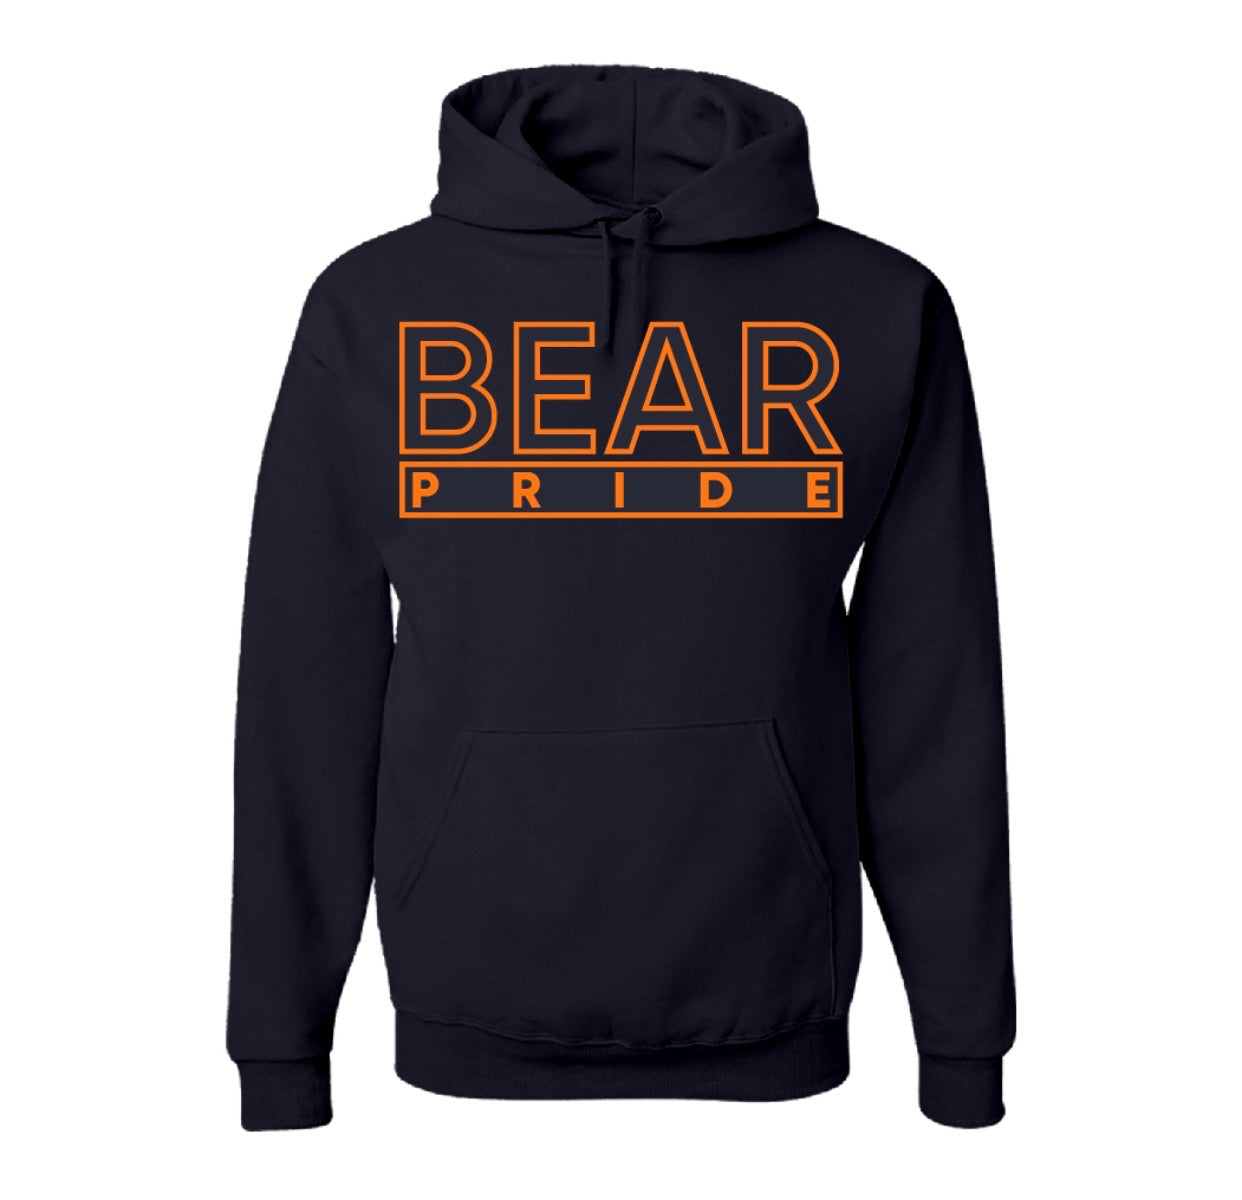 The “Bear Pride” Hoodie in Navy Blue and Orange (MD)